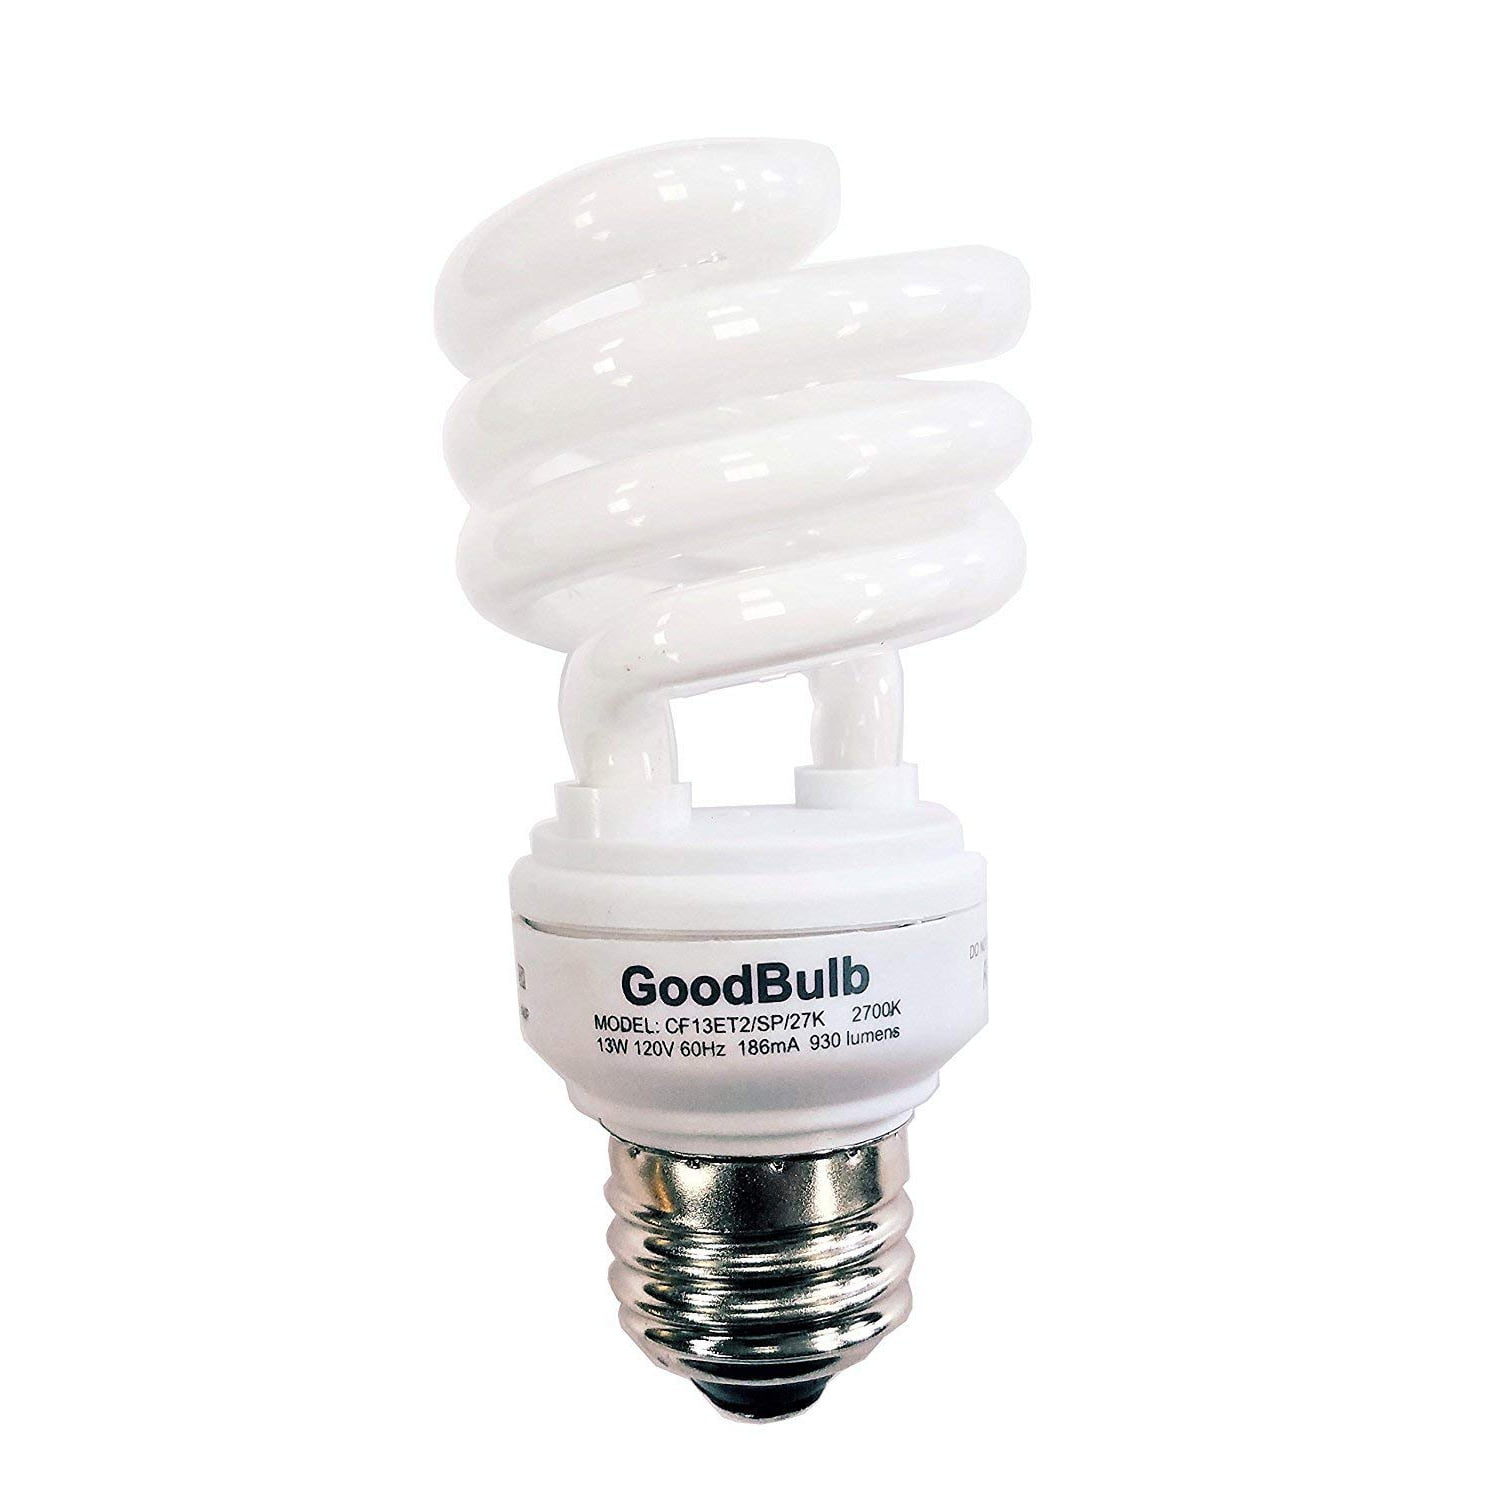 6 new 120V LIGHT BULB spring lamp fluorescent CFL 25w spiral 100w soft white E26 